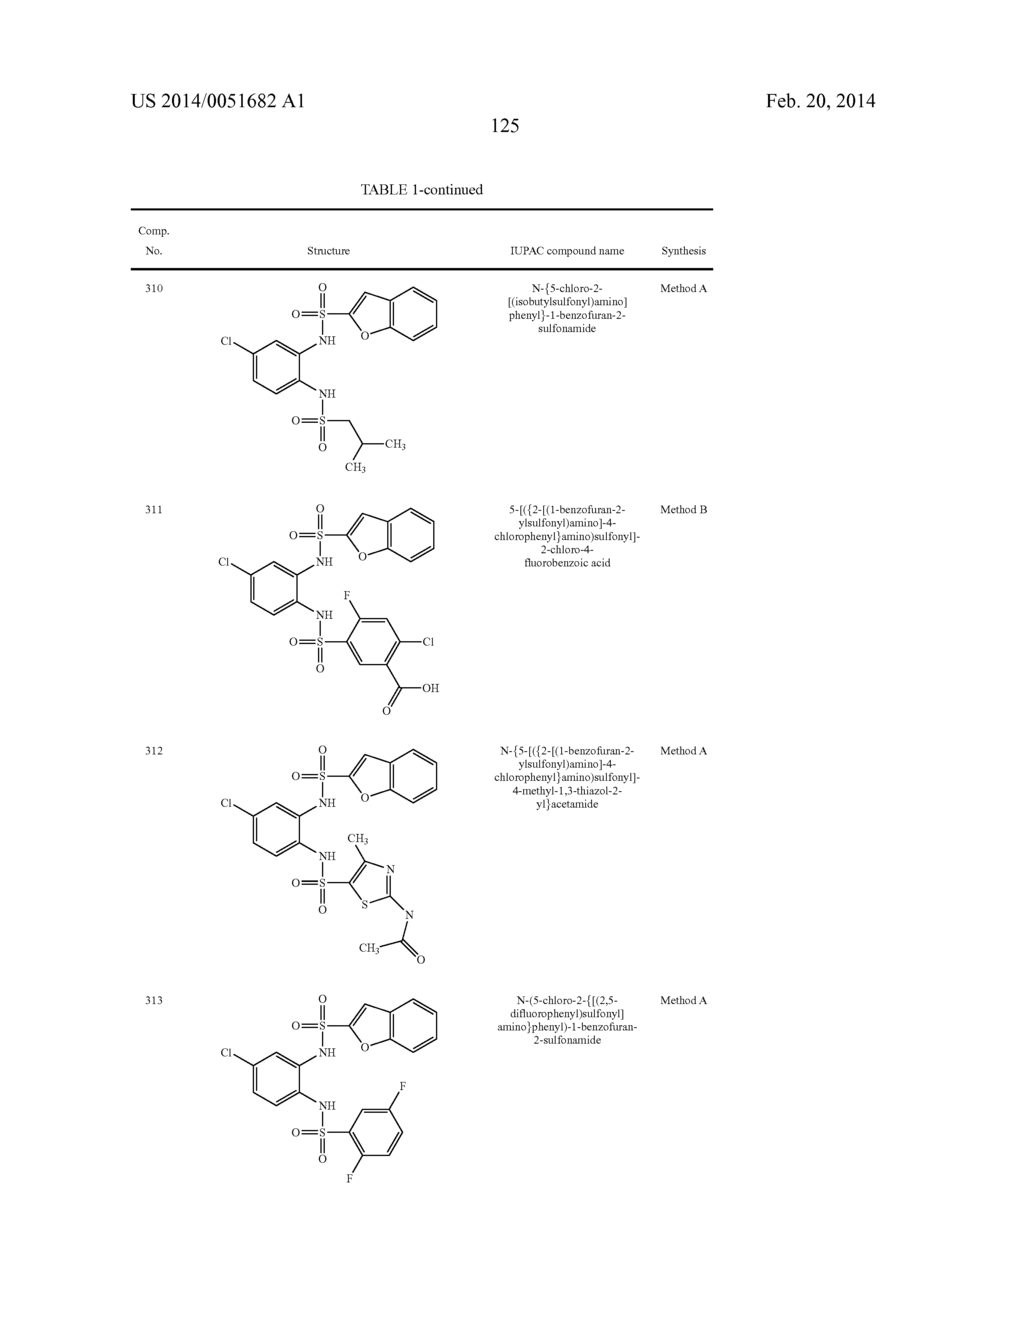 NOVEL 1,2- BIS-SULFONAMIDE DERIVATIVES AS CHEMOKINE RECEPTOR MODULATORS - diagram, schematic, and image 126